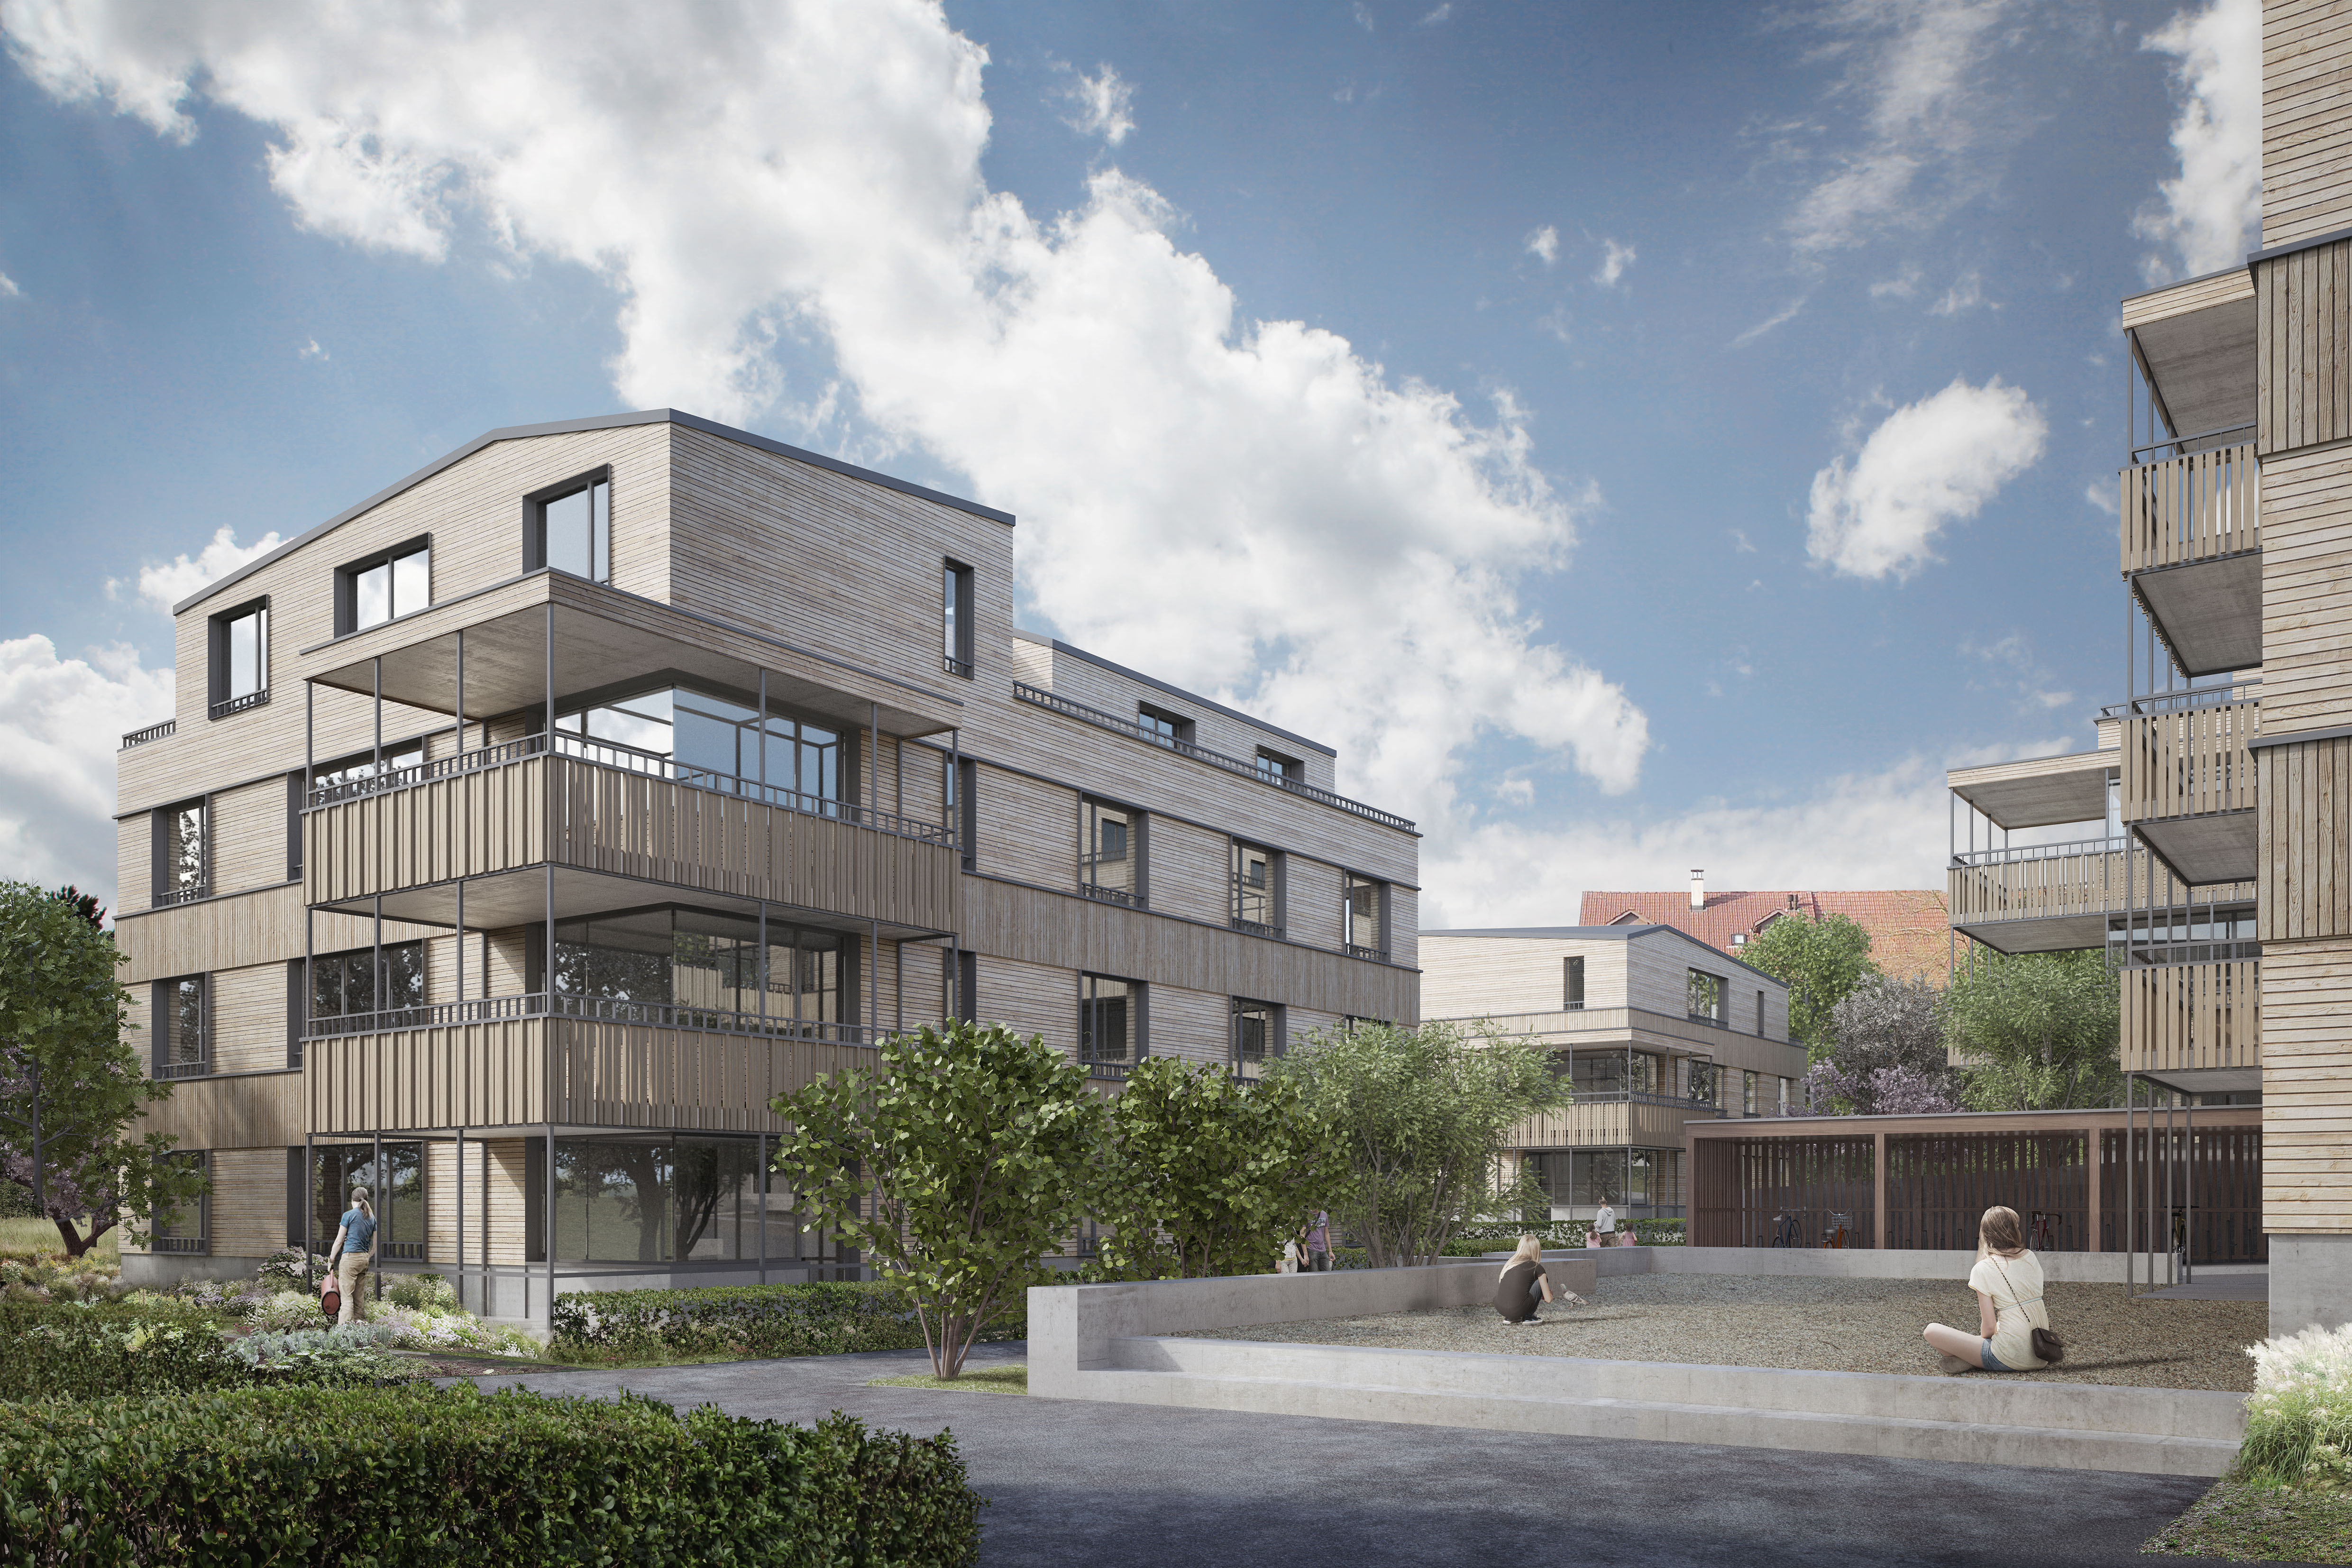 Wohnung finden & mieten: Winterthur - MoveAgain